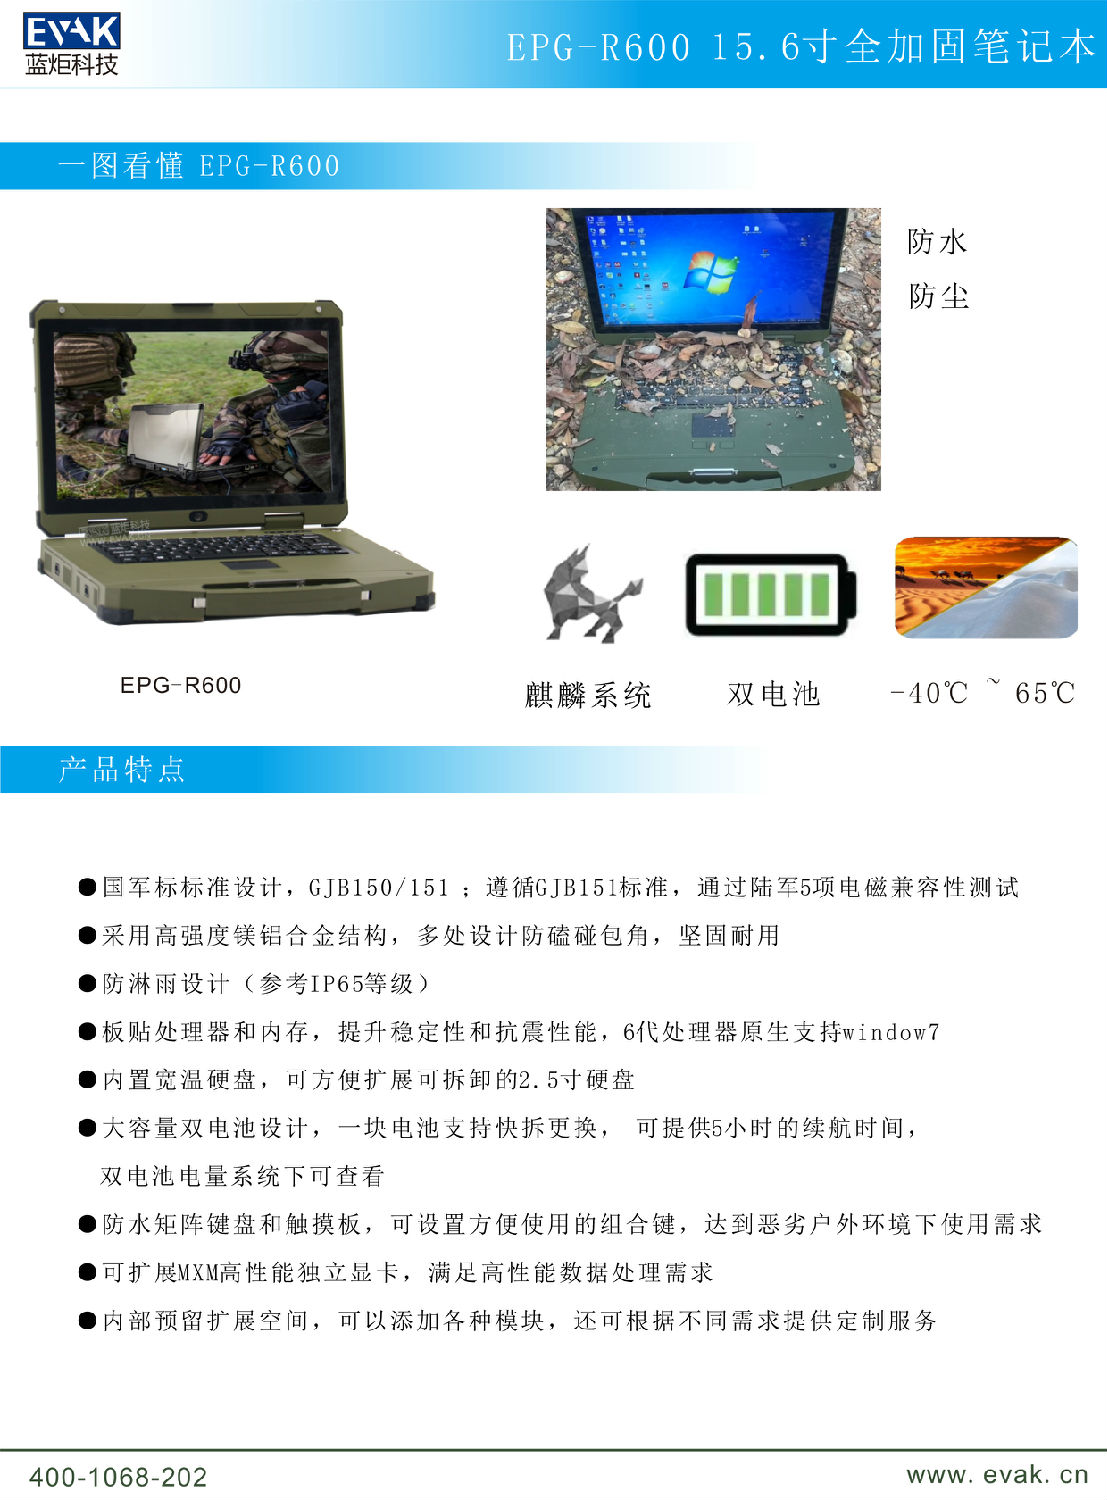 EPG-R600 全加固笔记本-2.jpg